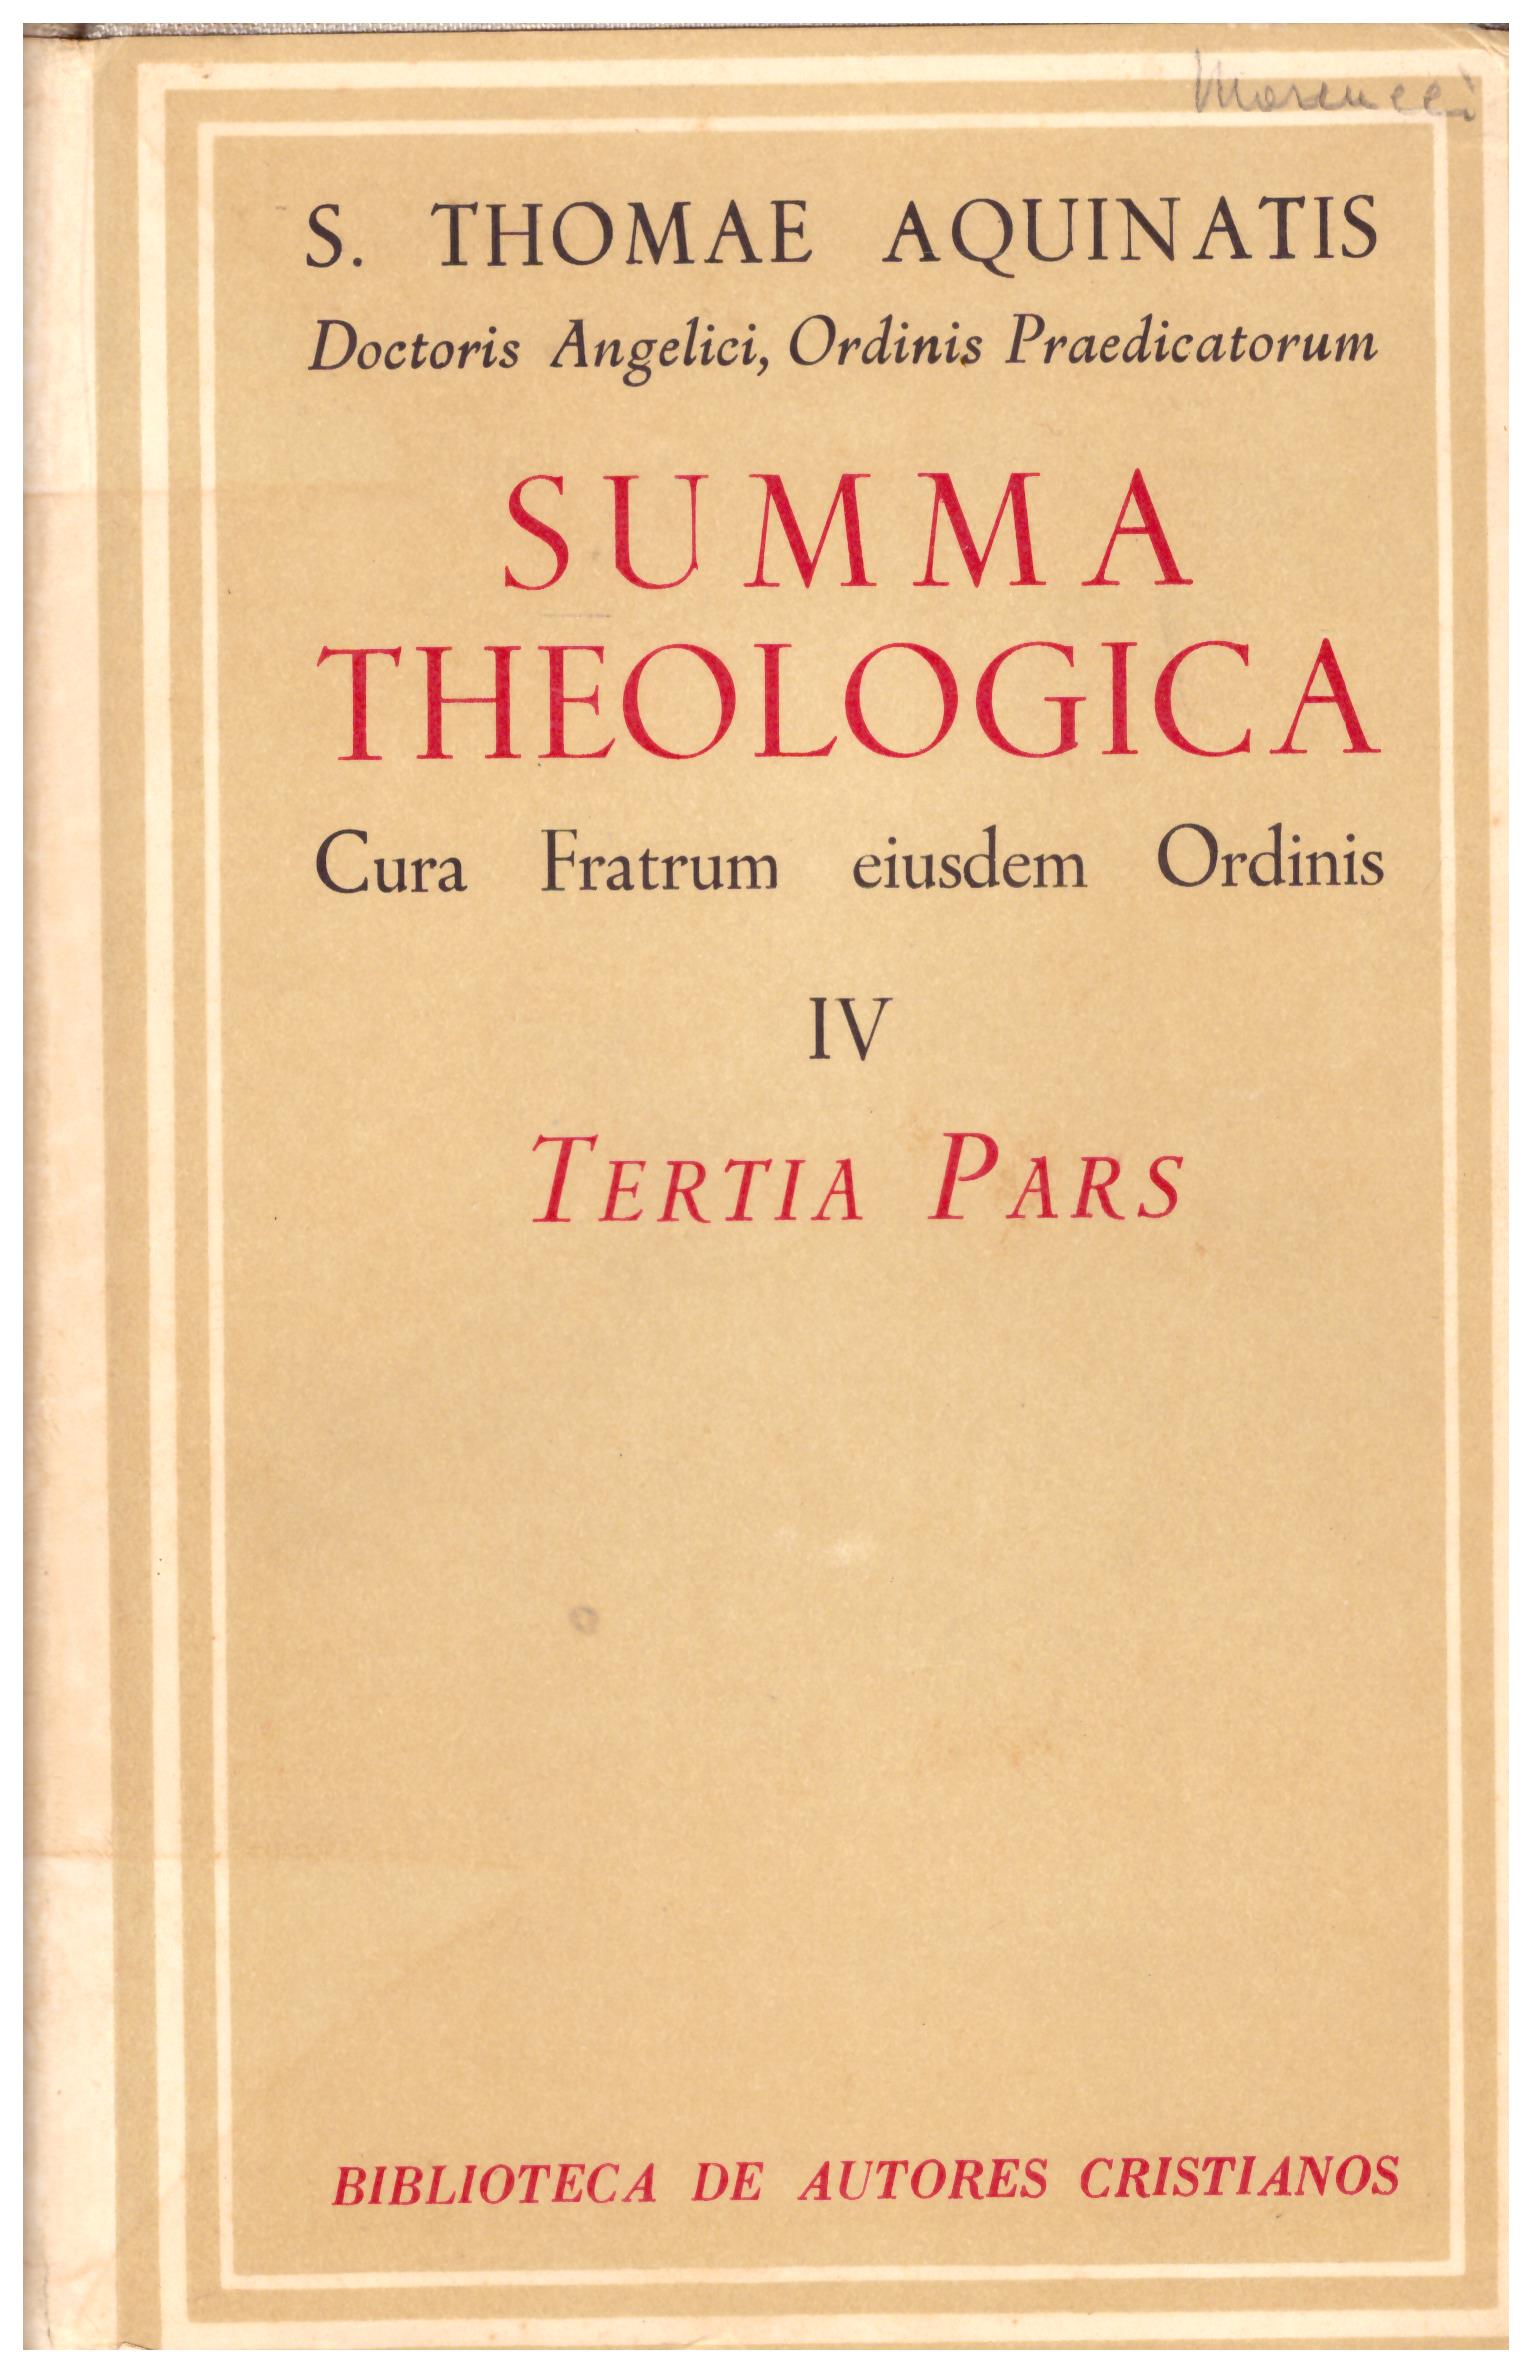 Titolo: Summa theologica in 5 volumi Autore : S. Thomae Aquinatis  Editore: biblioteca de autores cristianos, 1951 Madrid